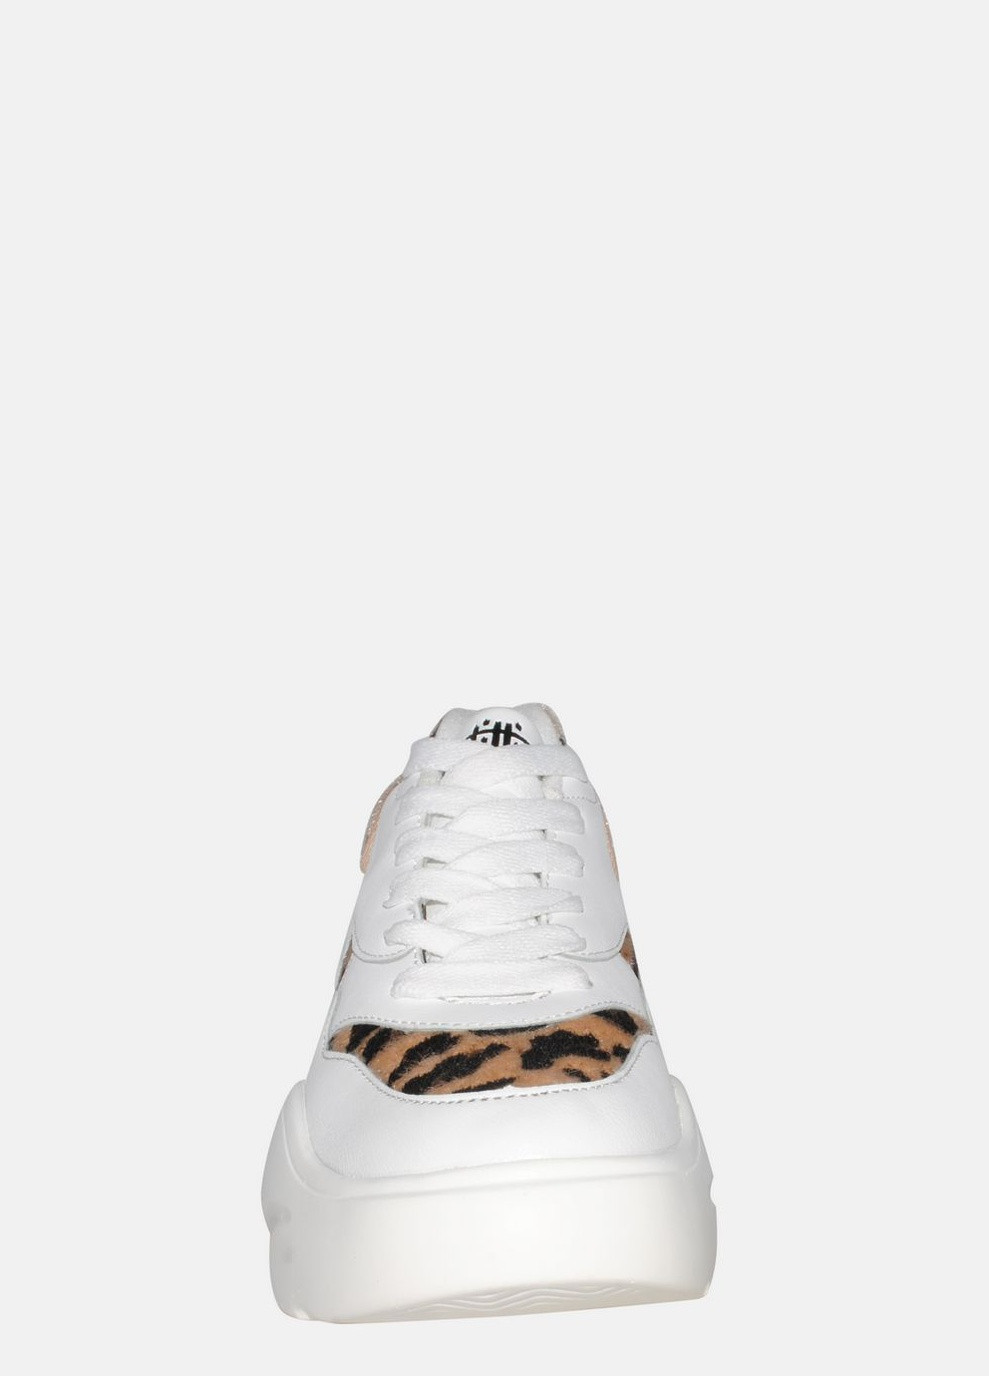 Білі осінні кросівки st5658-8 white-leopard Stilli